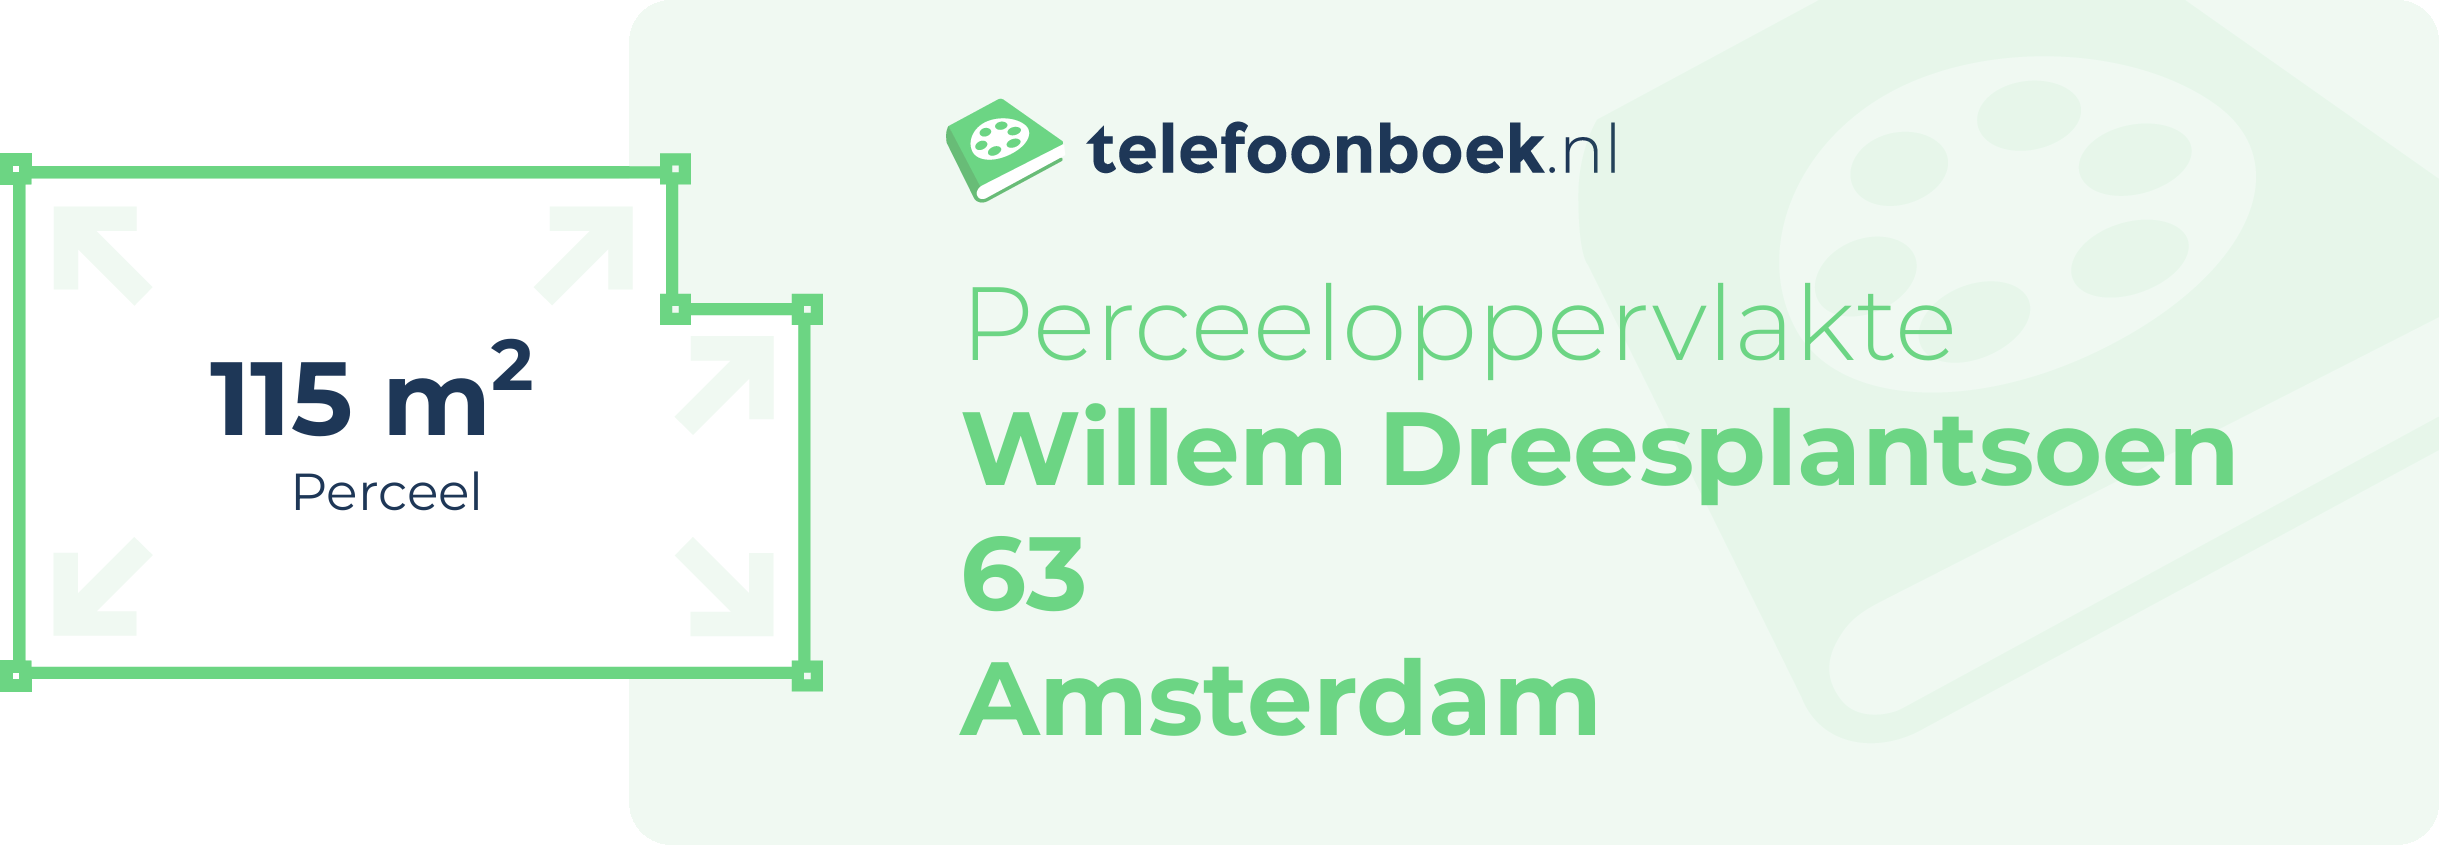 Perceeloppervlakte Willem Dreesplantsoen 63 Amsterdam